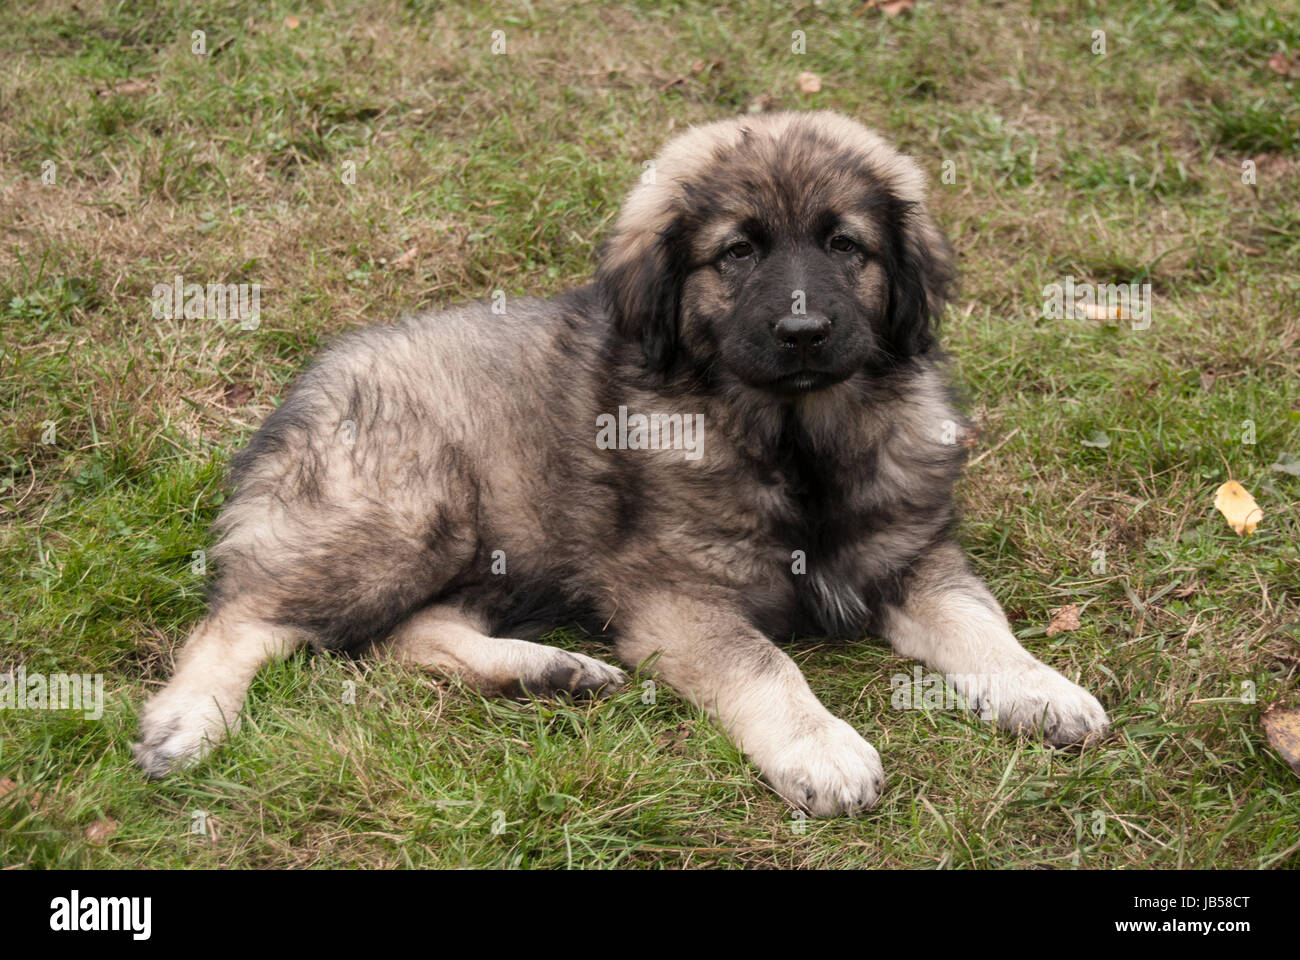 Kid of the Shepherd dog of the race Šarplaninac ( illyrian sheepdog) Stock Photo